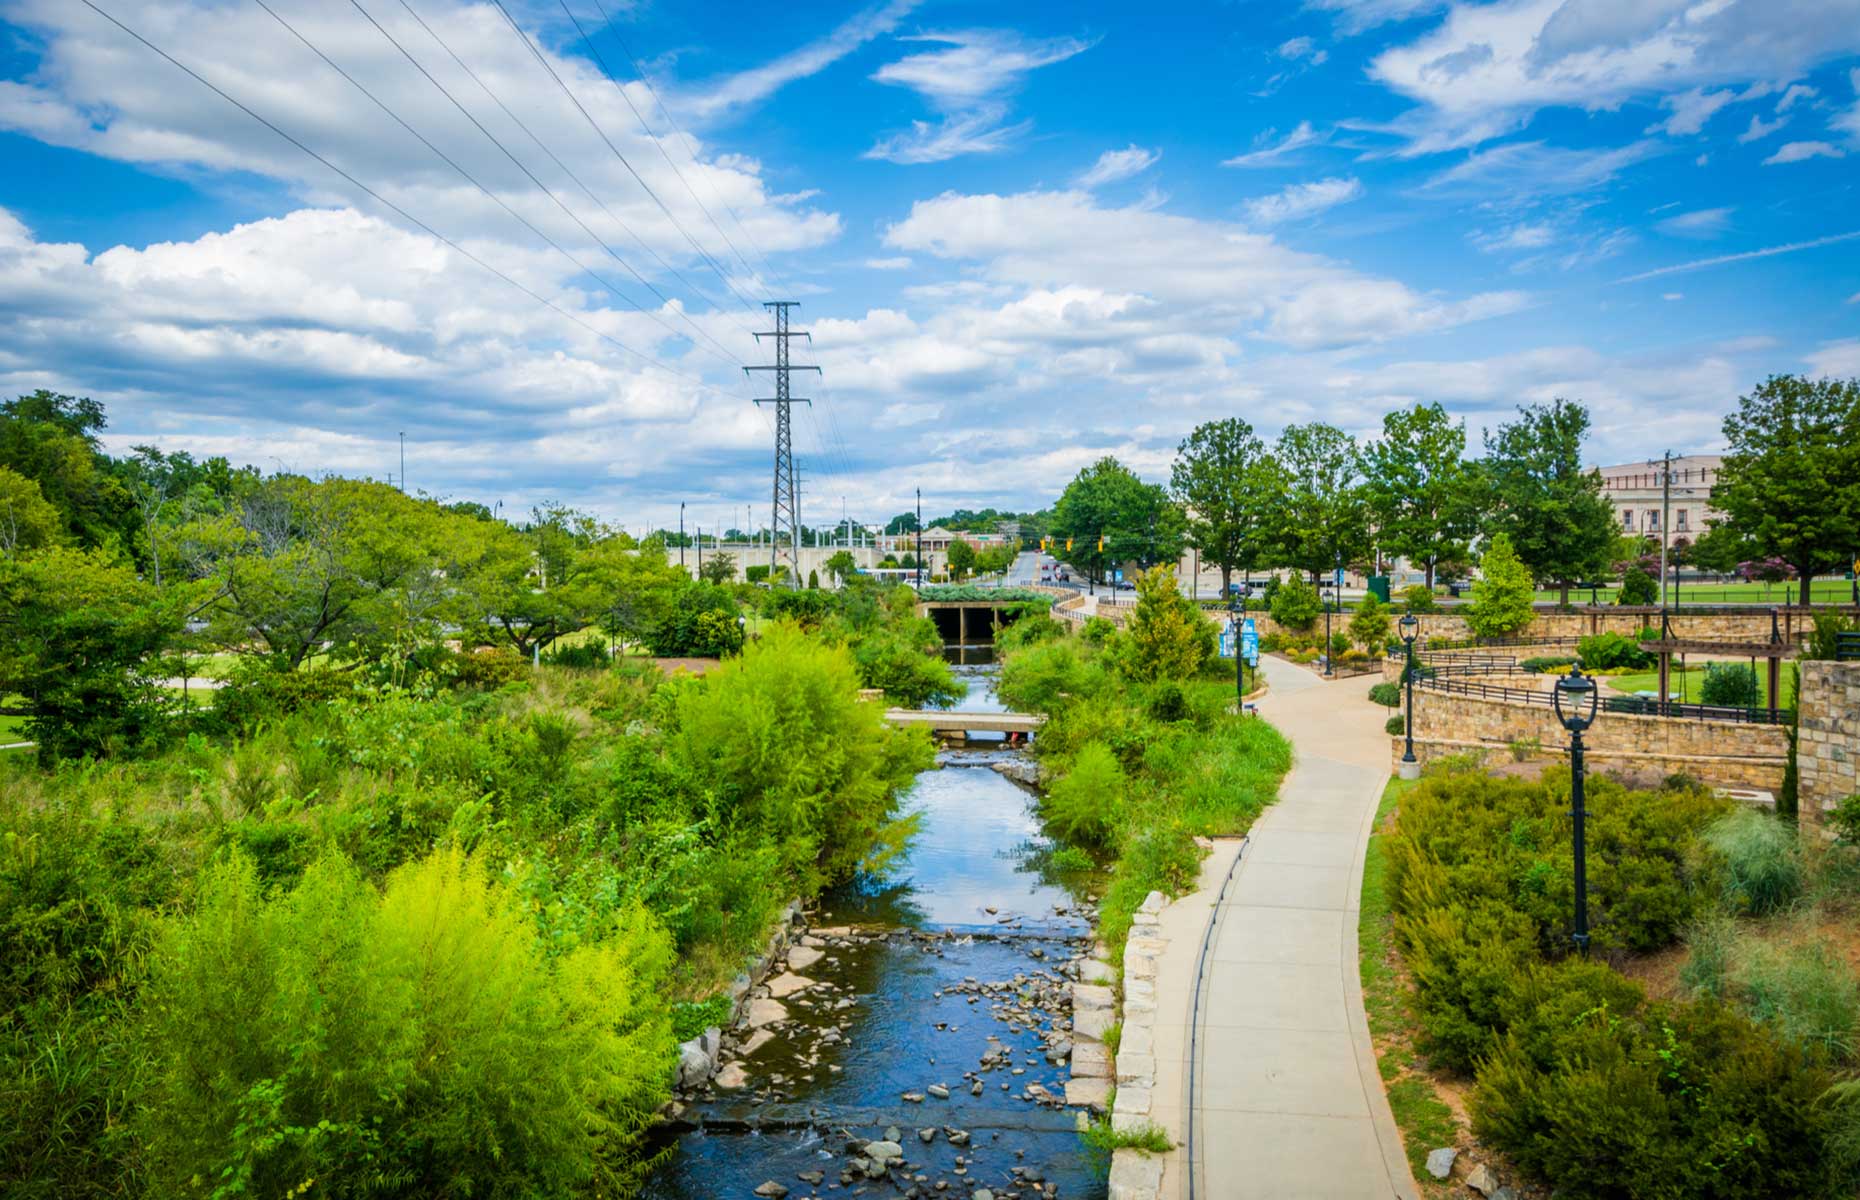 Little Sugar Creek Greenway, Charlotte, North Carolina, USA (Image: Jon Bilous/Shutterstock)